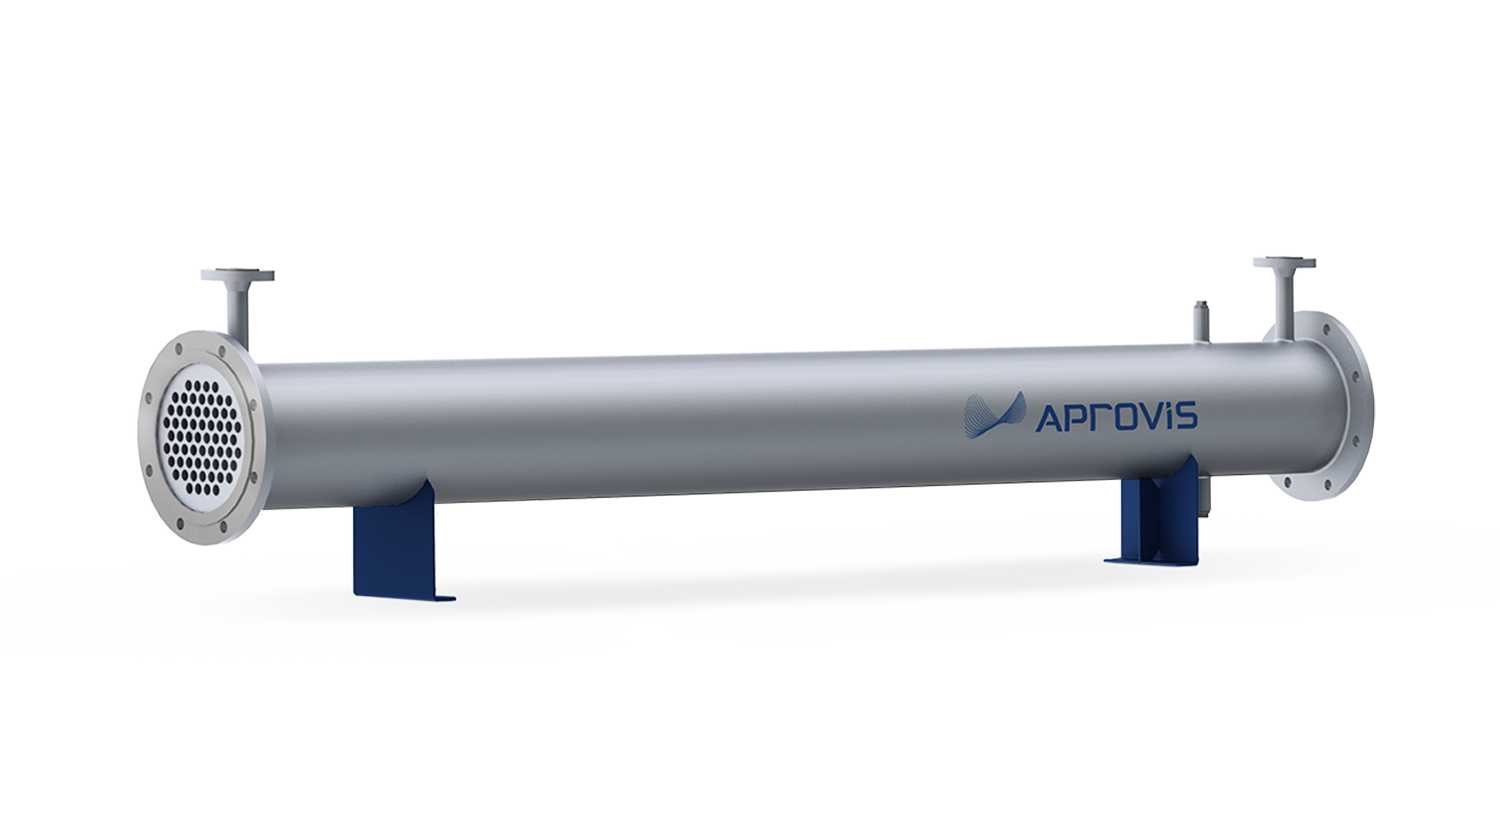 APROVIS process gas heat exchanger